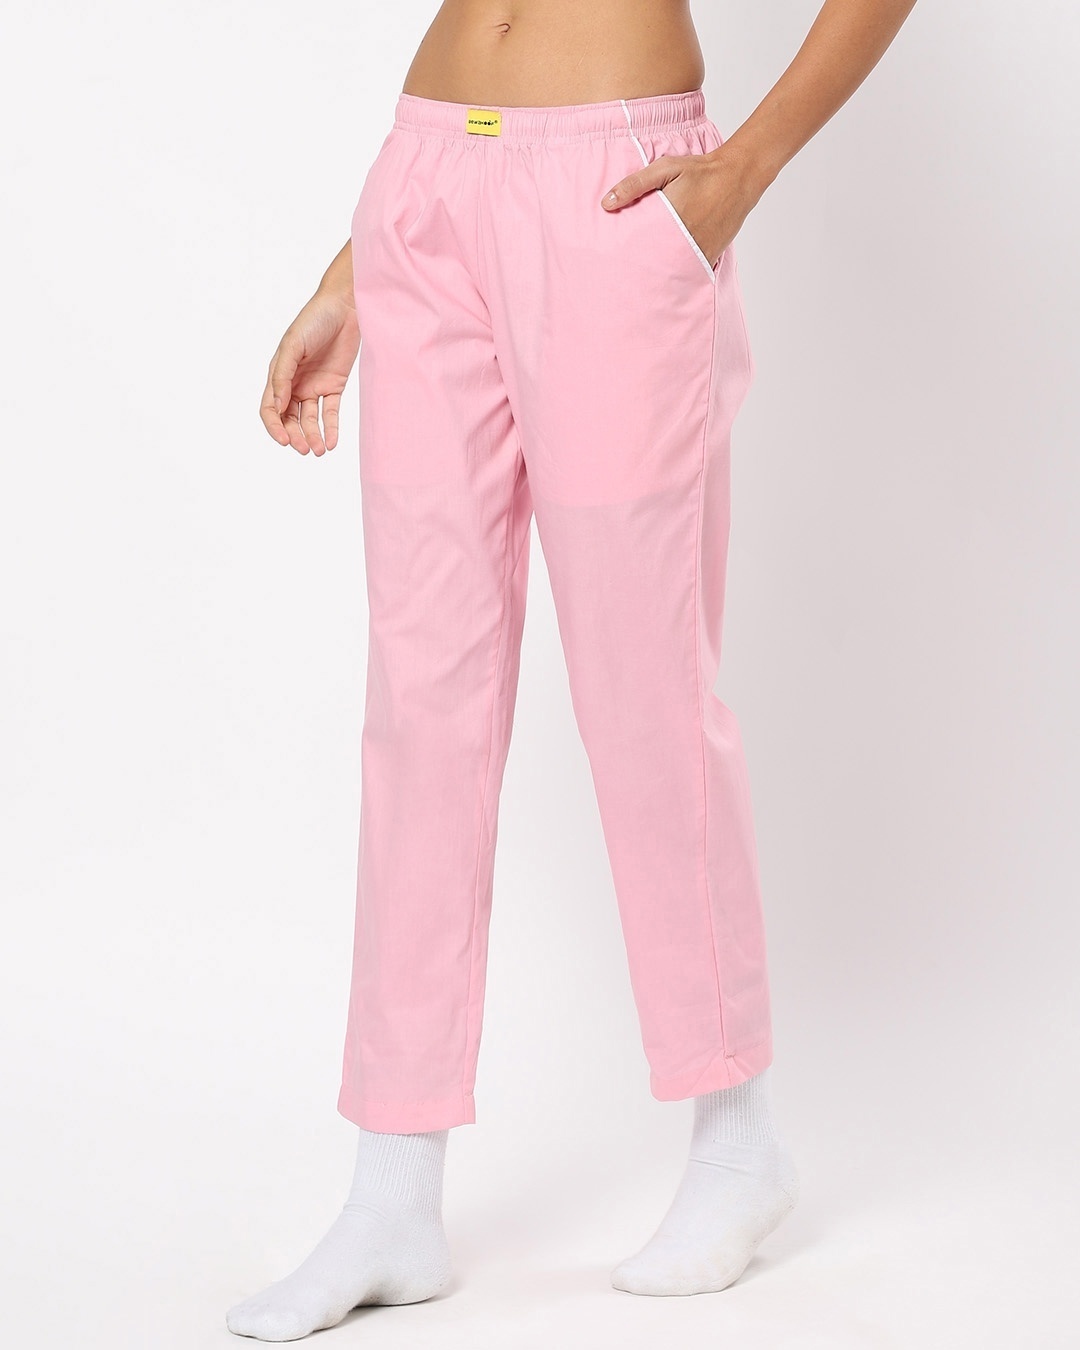 Shop Pink Carnation Plain Pyjama-Back